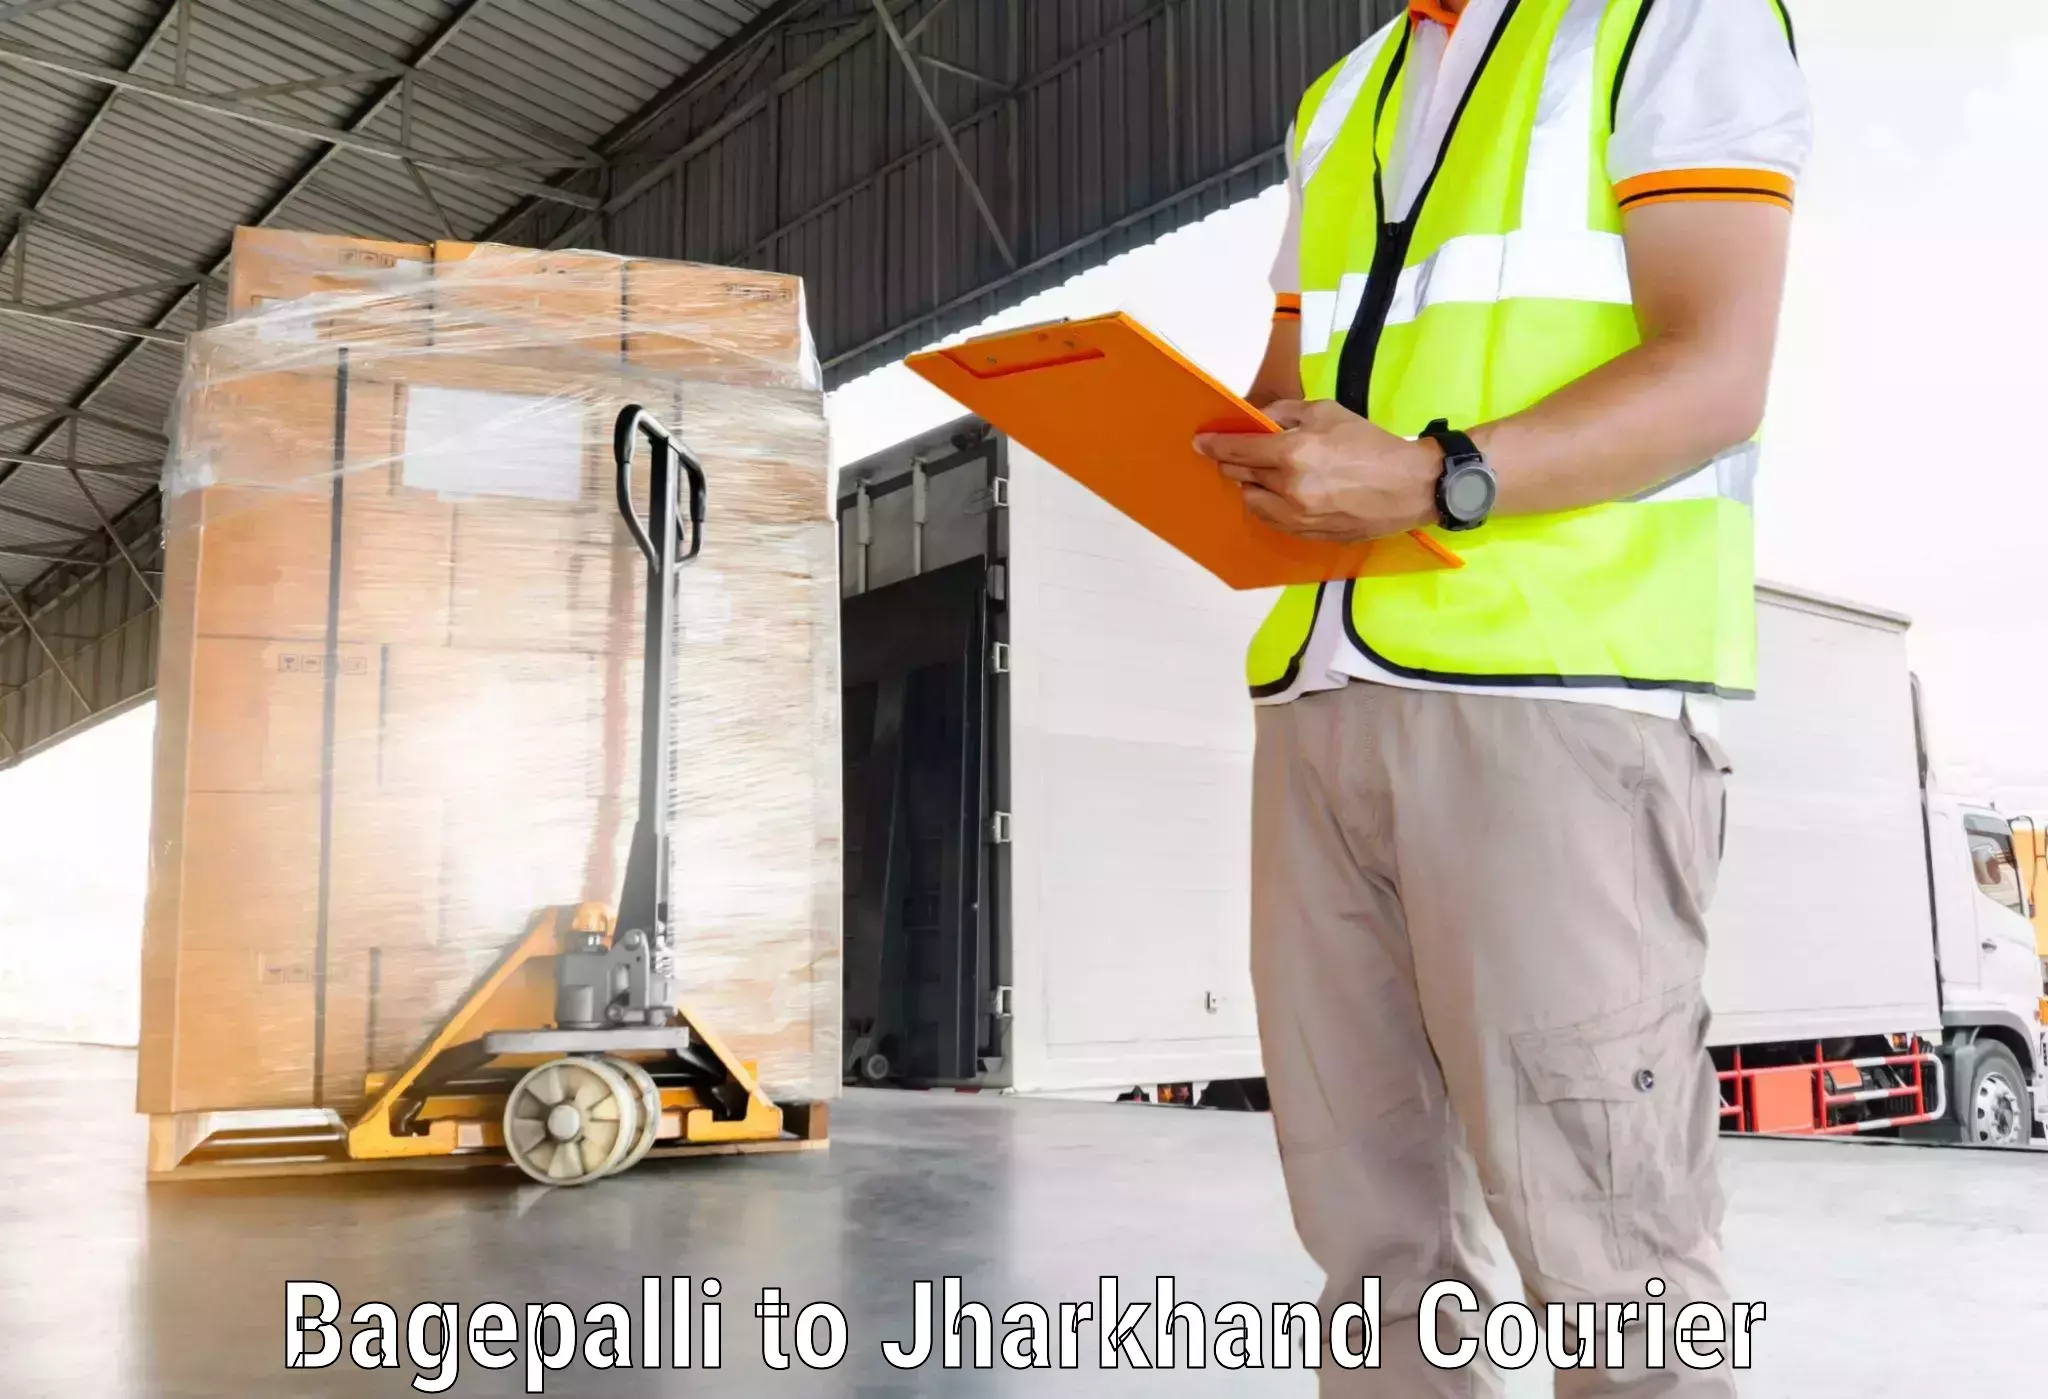 Courier service efficiency Bagepalli to Padma Hazaribagh